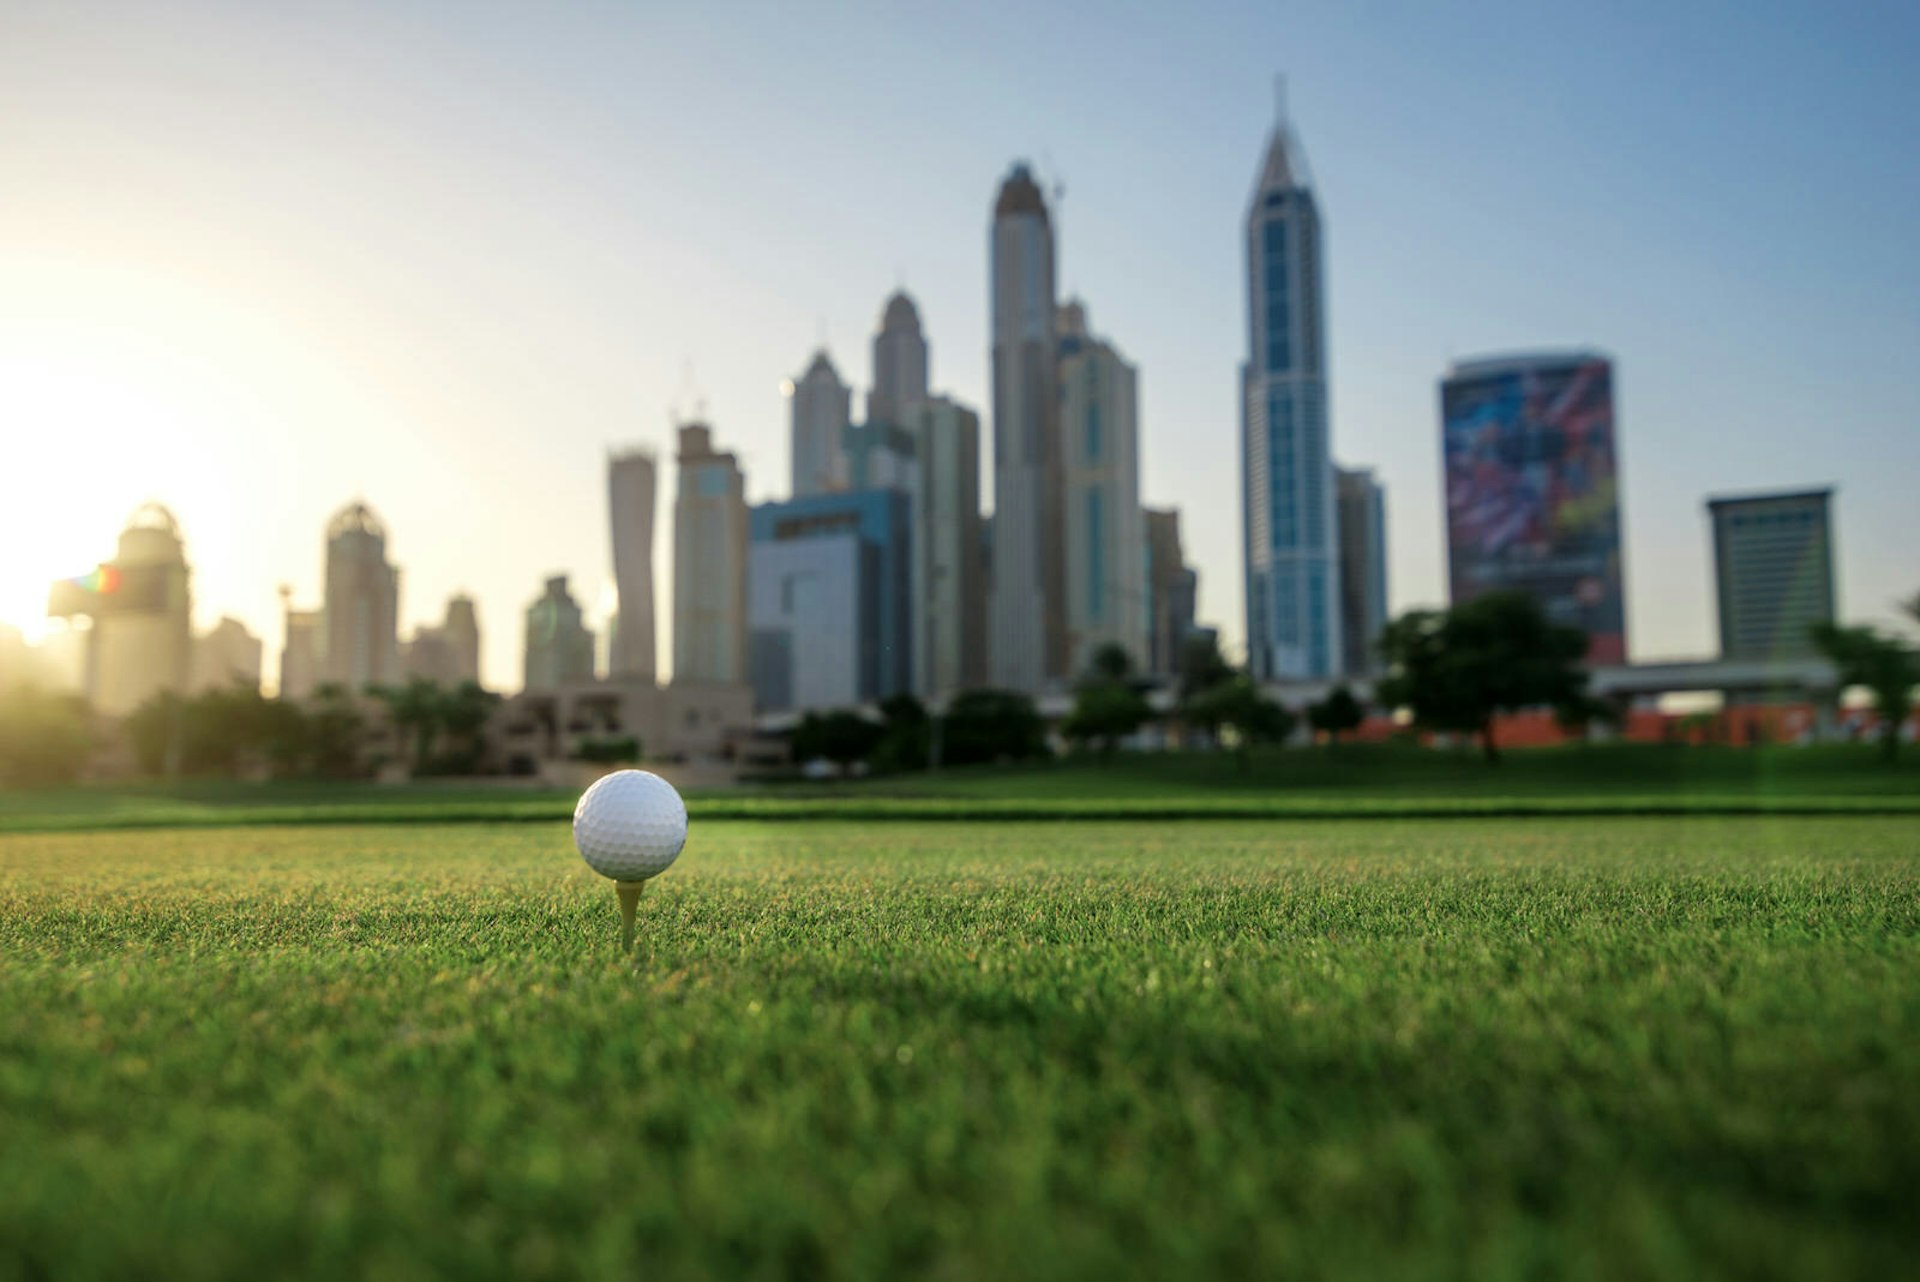 Golfing in the shadow of Dubai's skyscrapers. Image by Maksym Poriechkin / Shutterstock